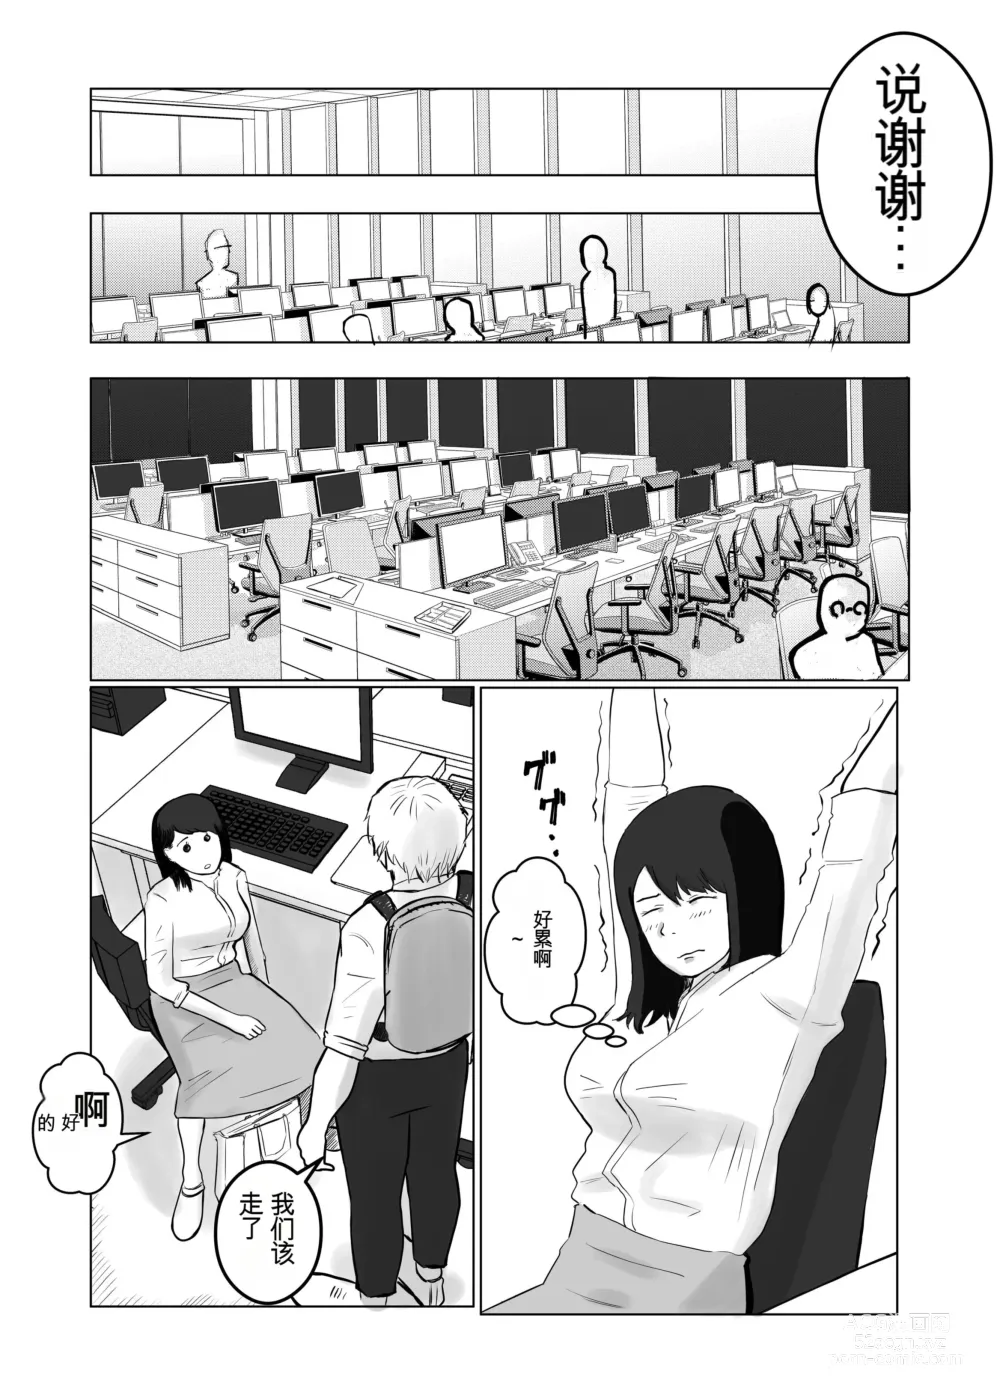 Page 29 of doujinshi 请让我睡一觉再考虑一下